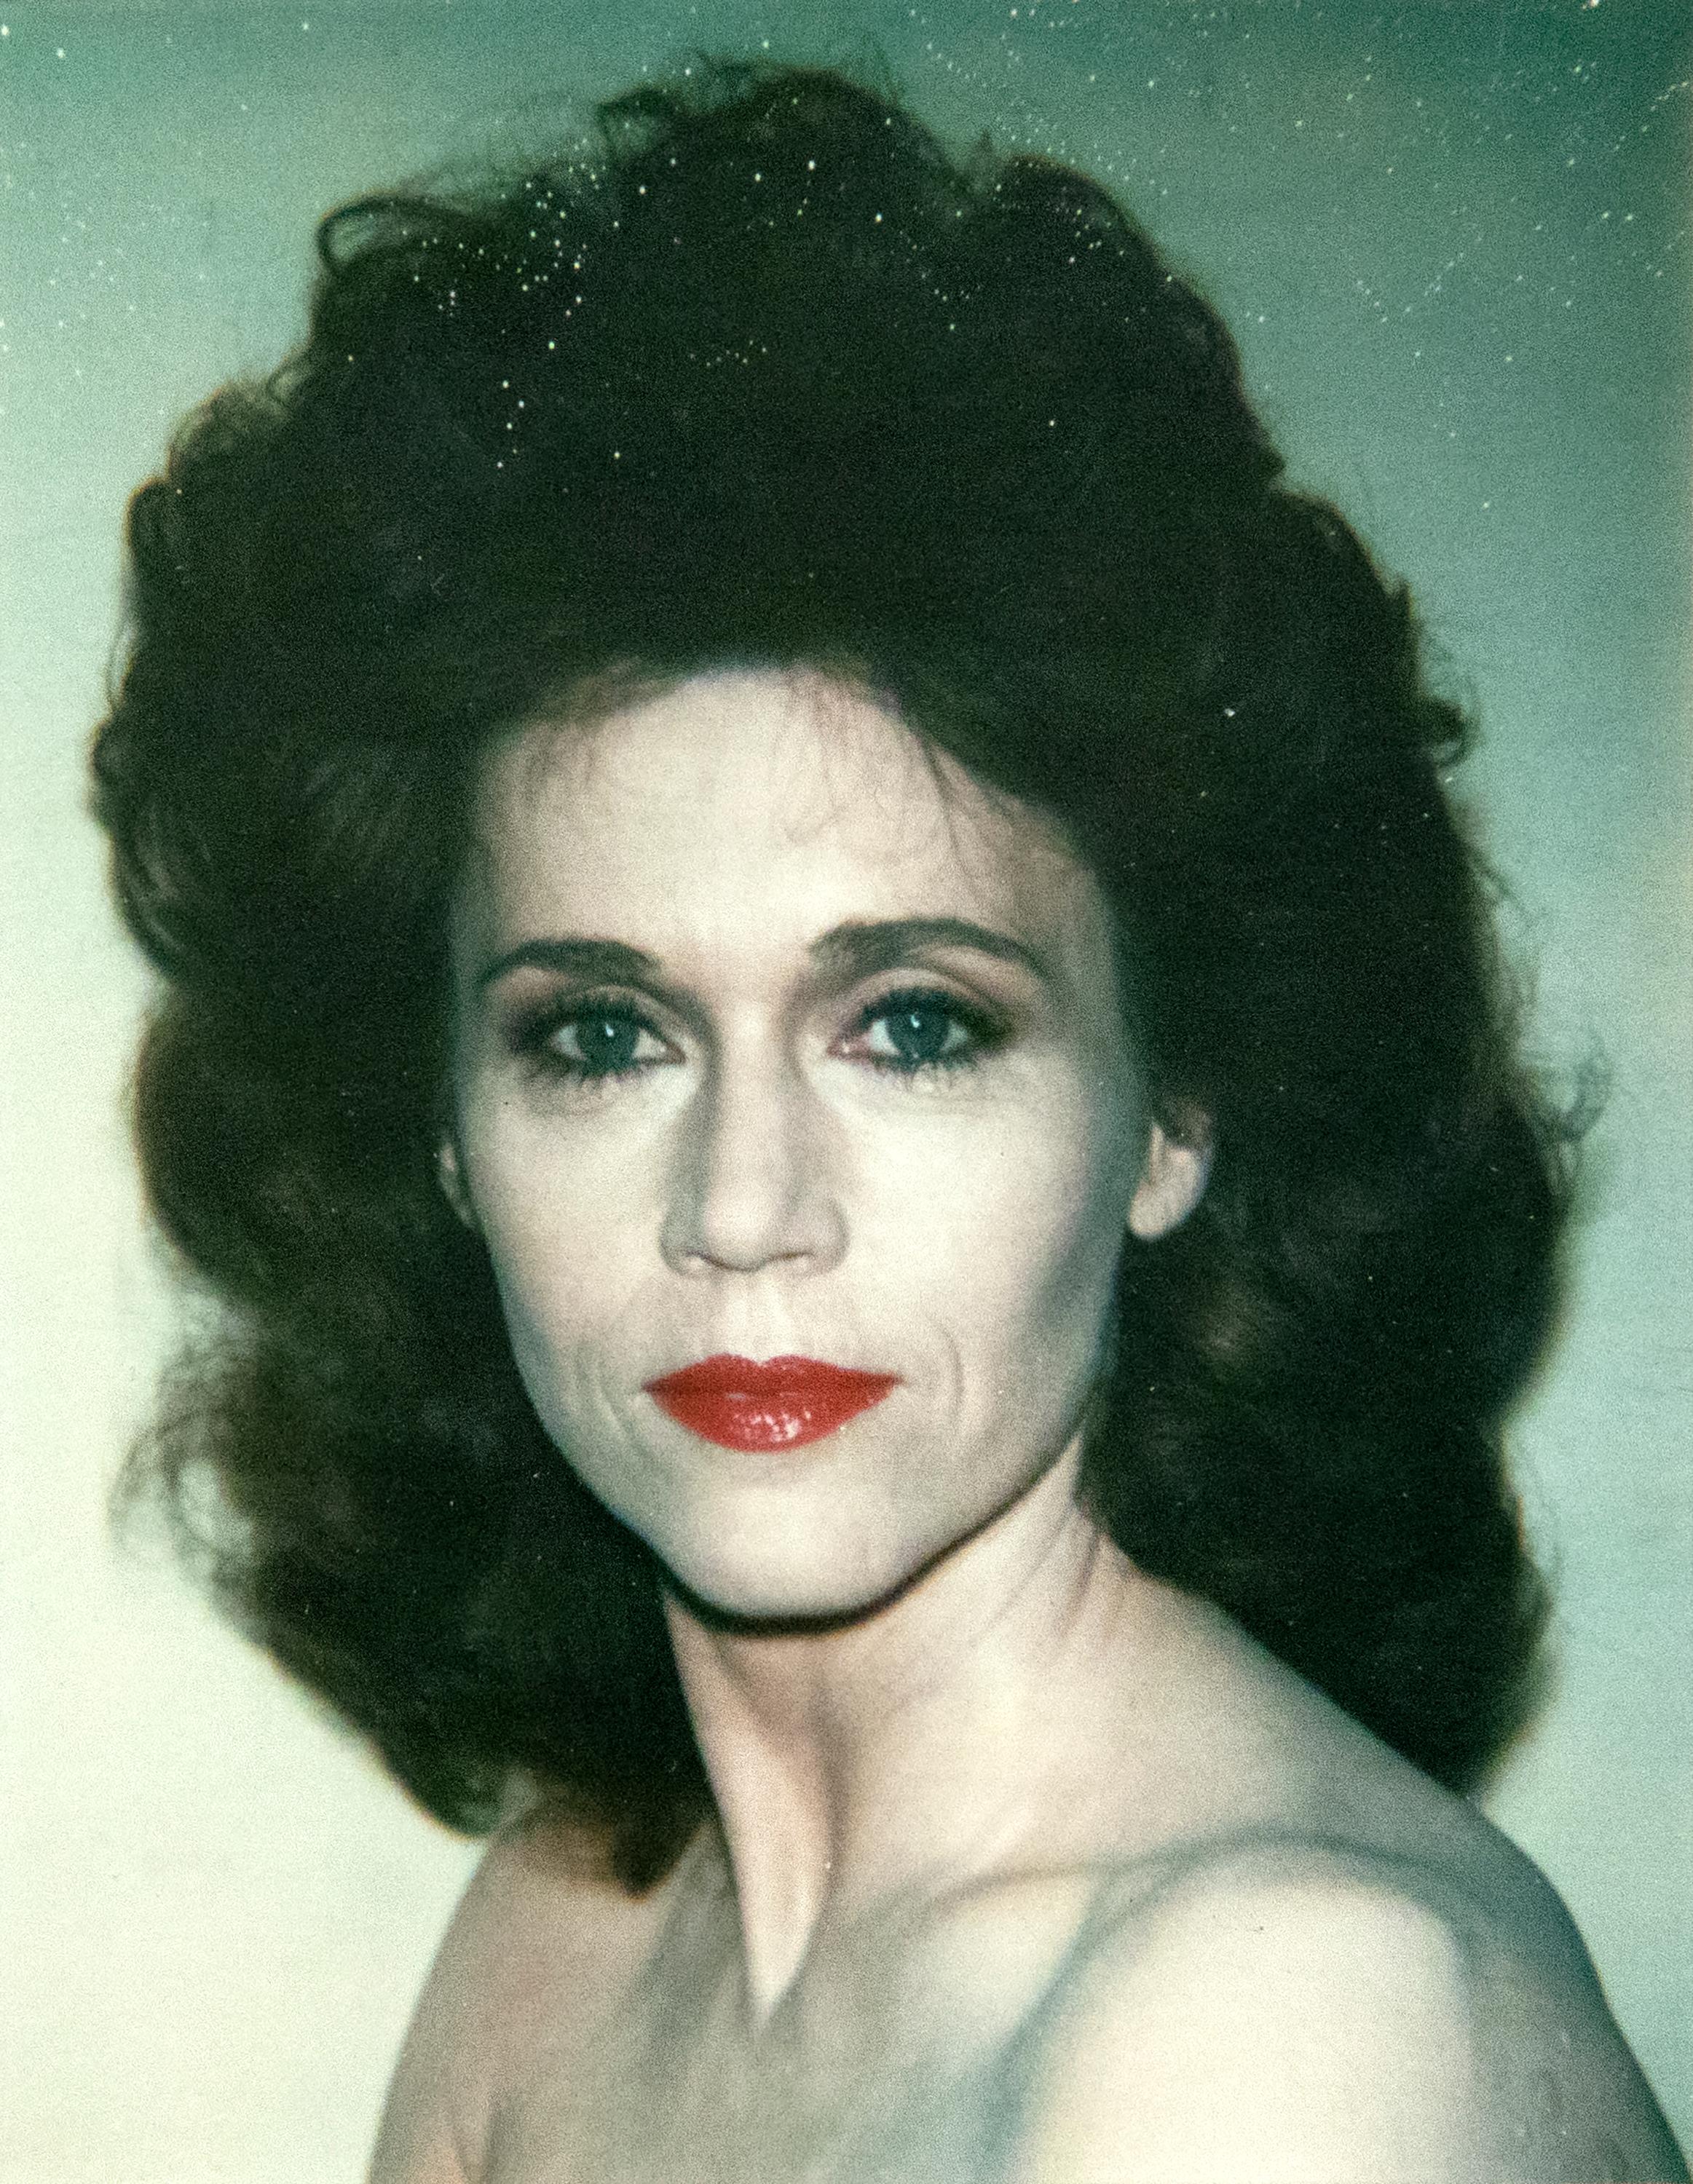 Andy Warhol Portrait Photograph – Jane Fonda, Jane Fonda